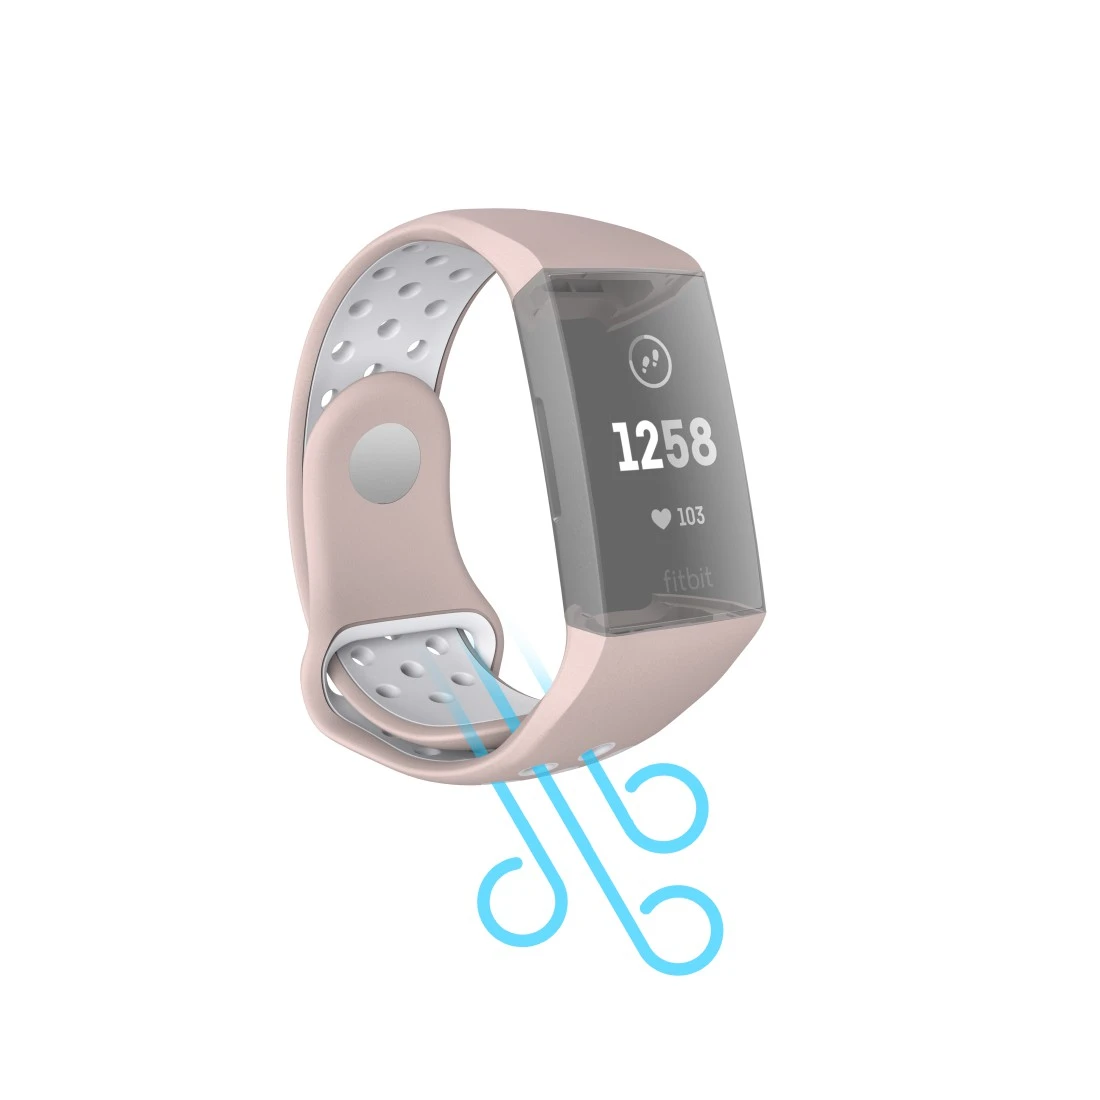 Rosé/Grau Hama Sportarmband für Charge Fitbit 3/4, | Uhrenarmband, atmungsaktives